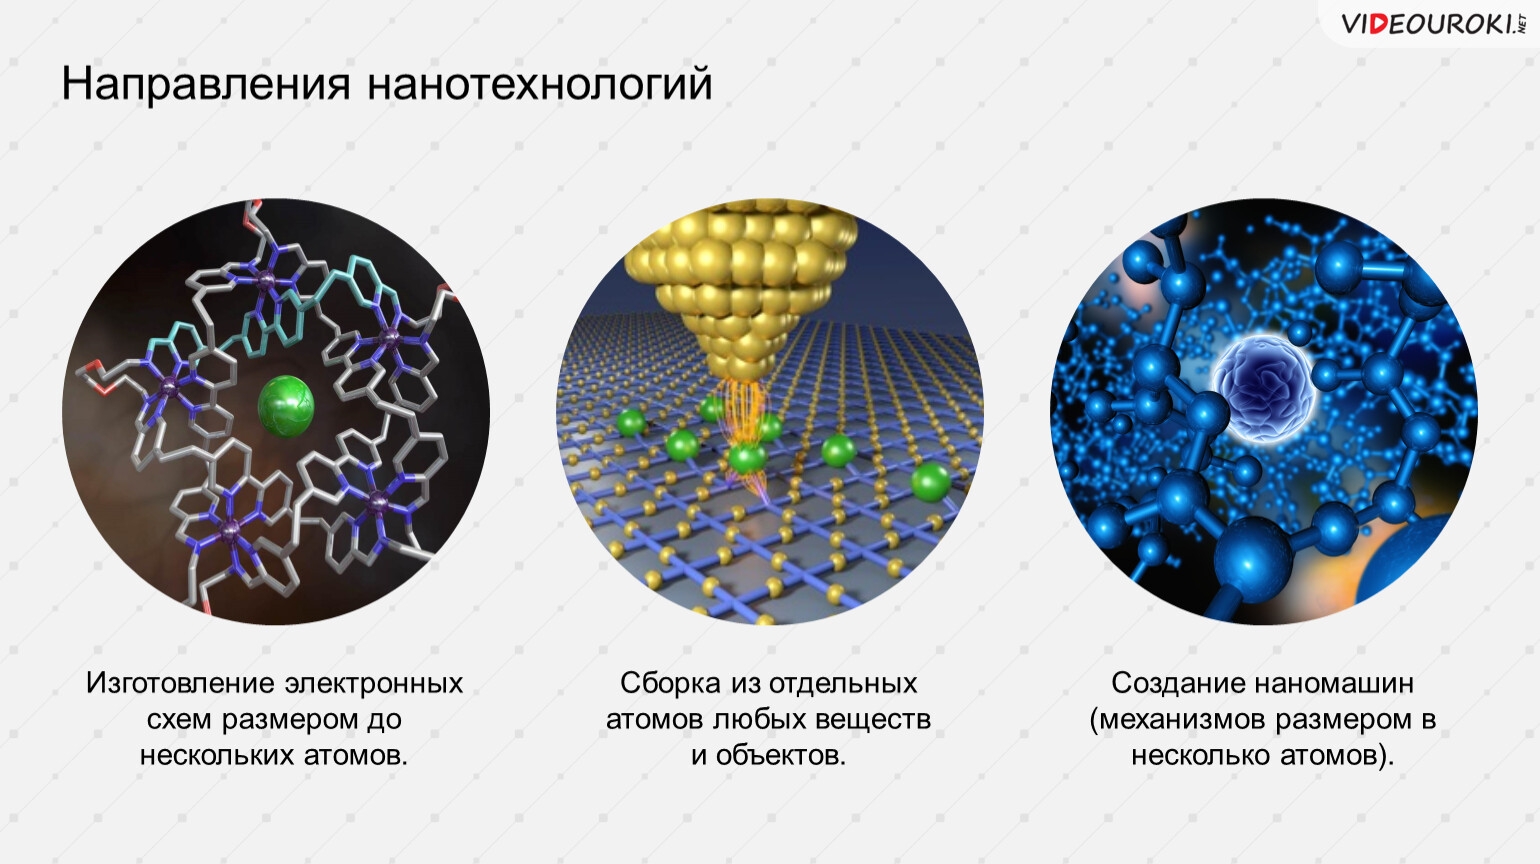 Нанотехнология суть. Направления нанотехнологий. Нанотехнологии схема. Нанотехнологии презентация. Основные направления нанотехнологии.